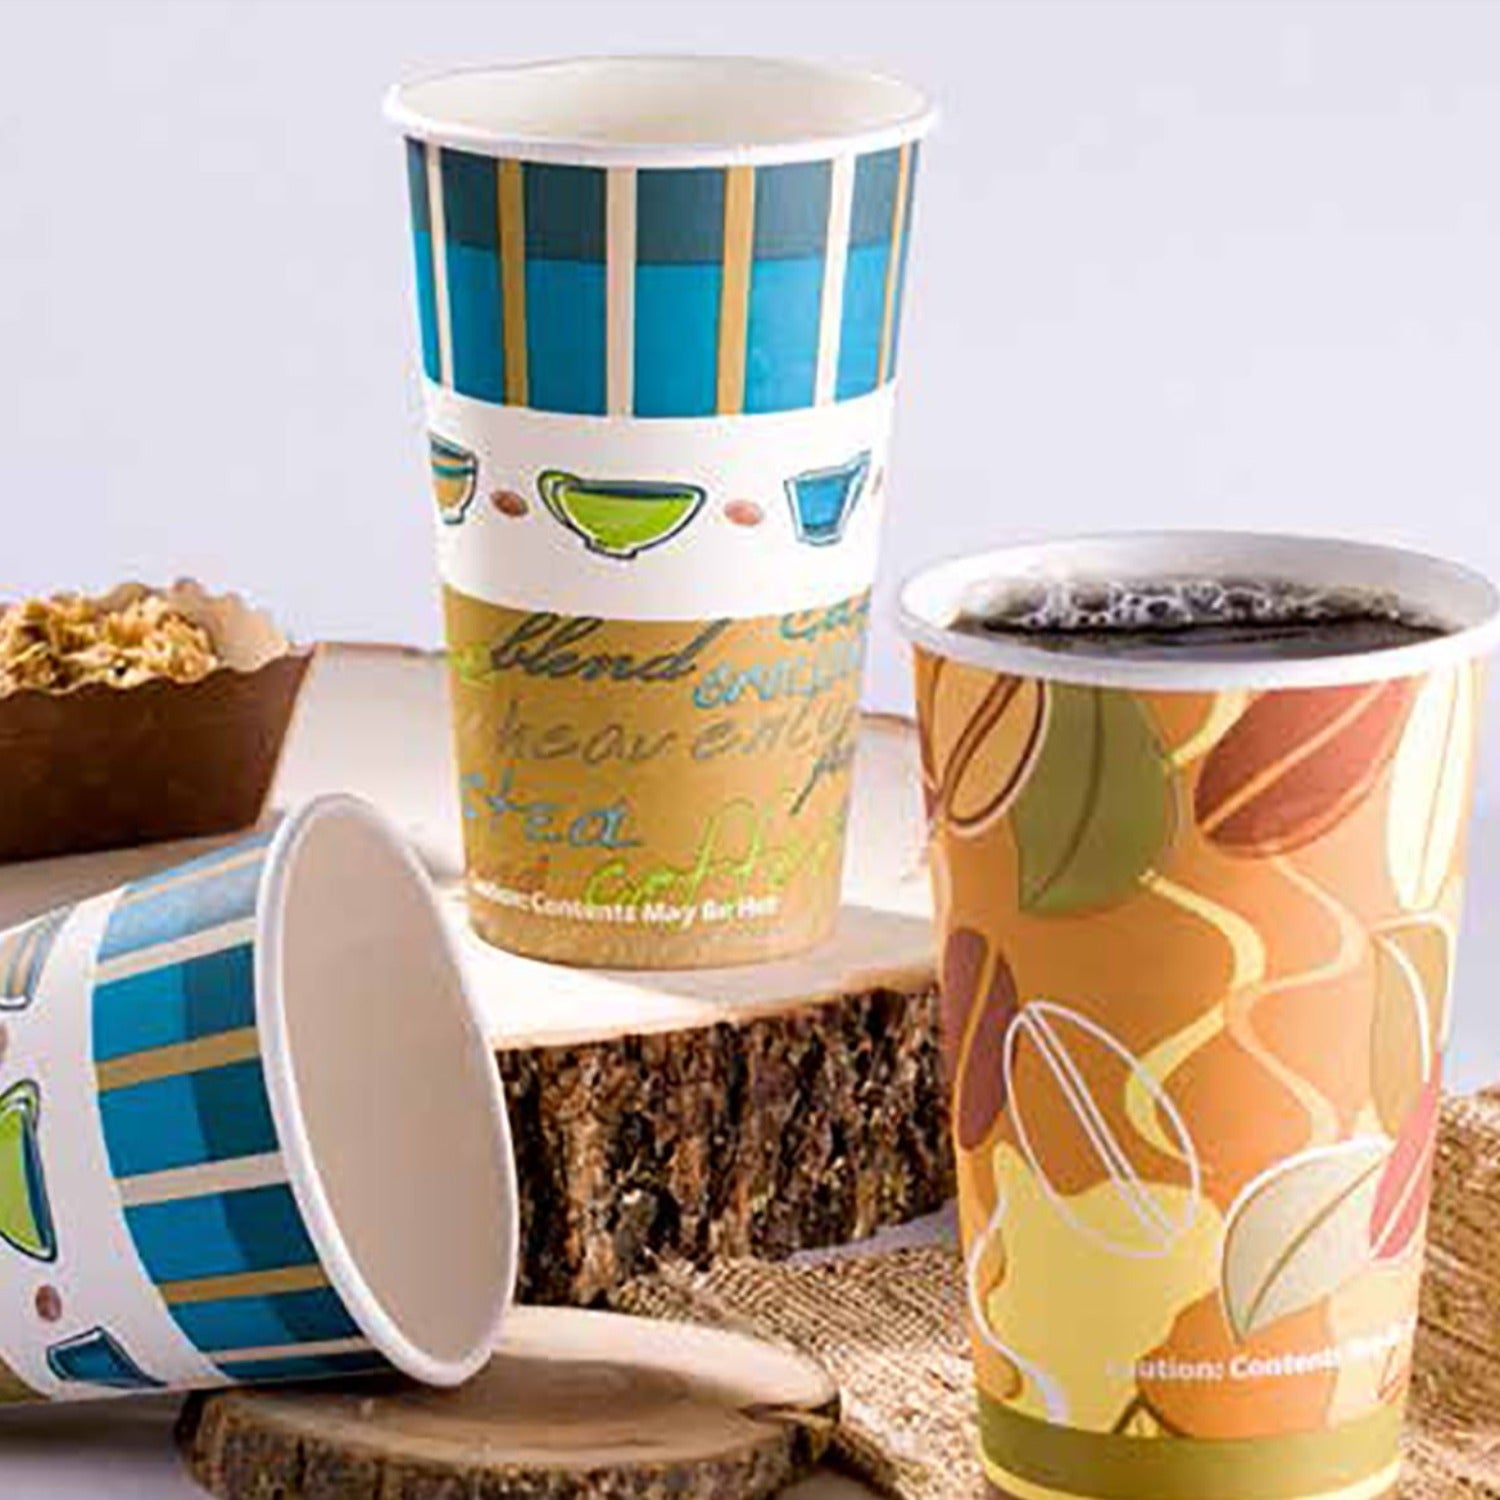 16 oz. DART Styrofoam Cups - Office Coffee Service SAVE up to 60